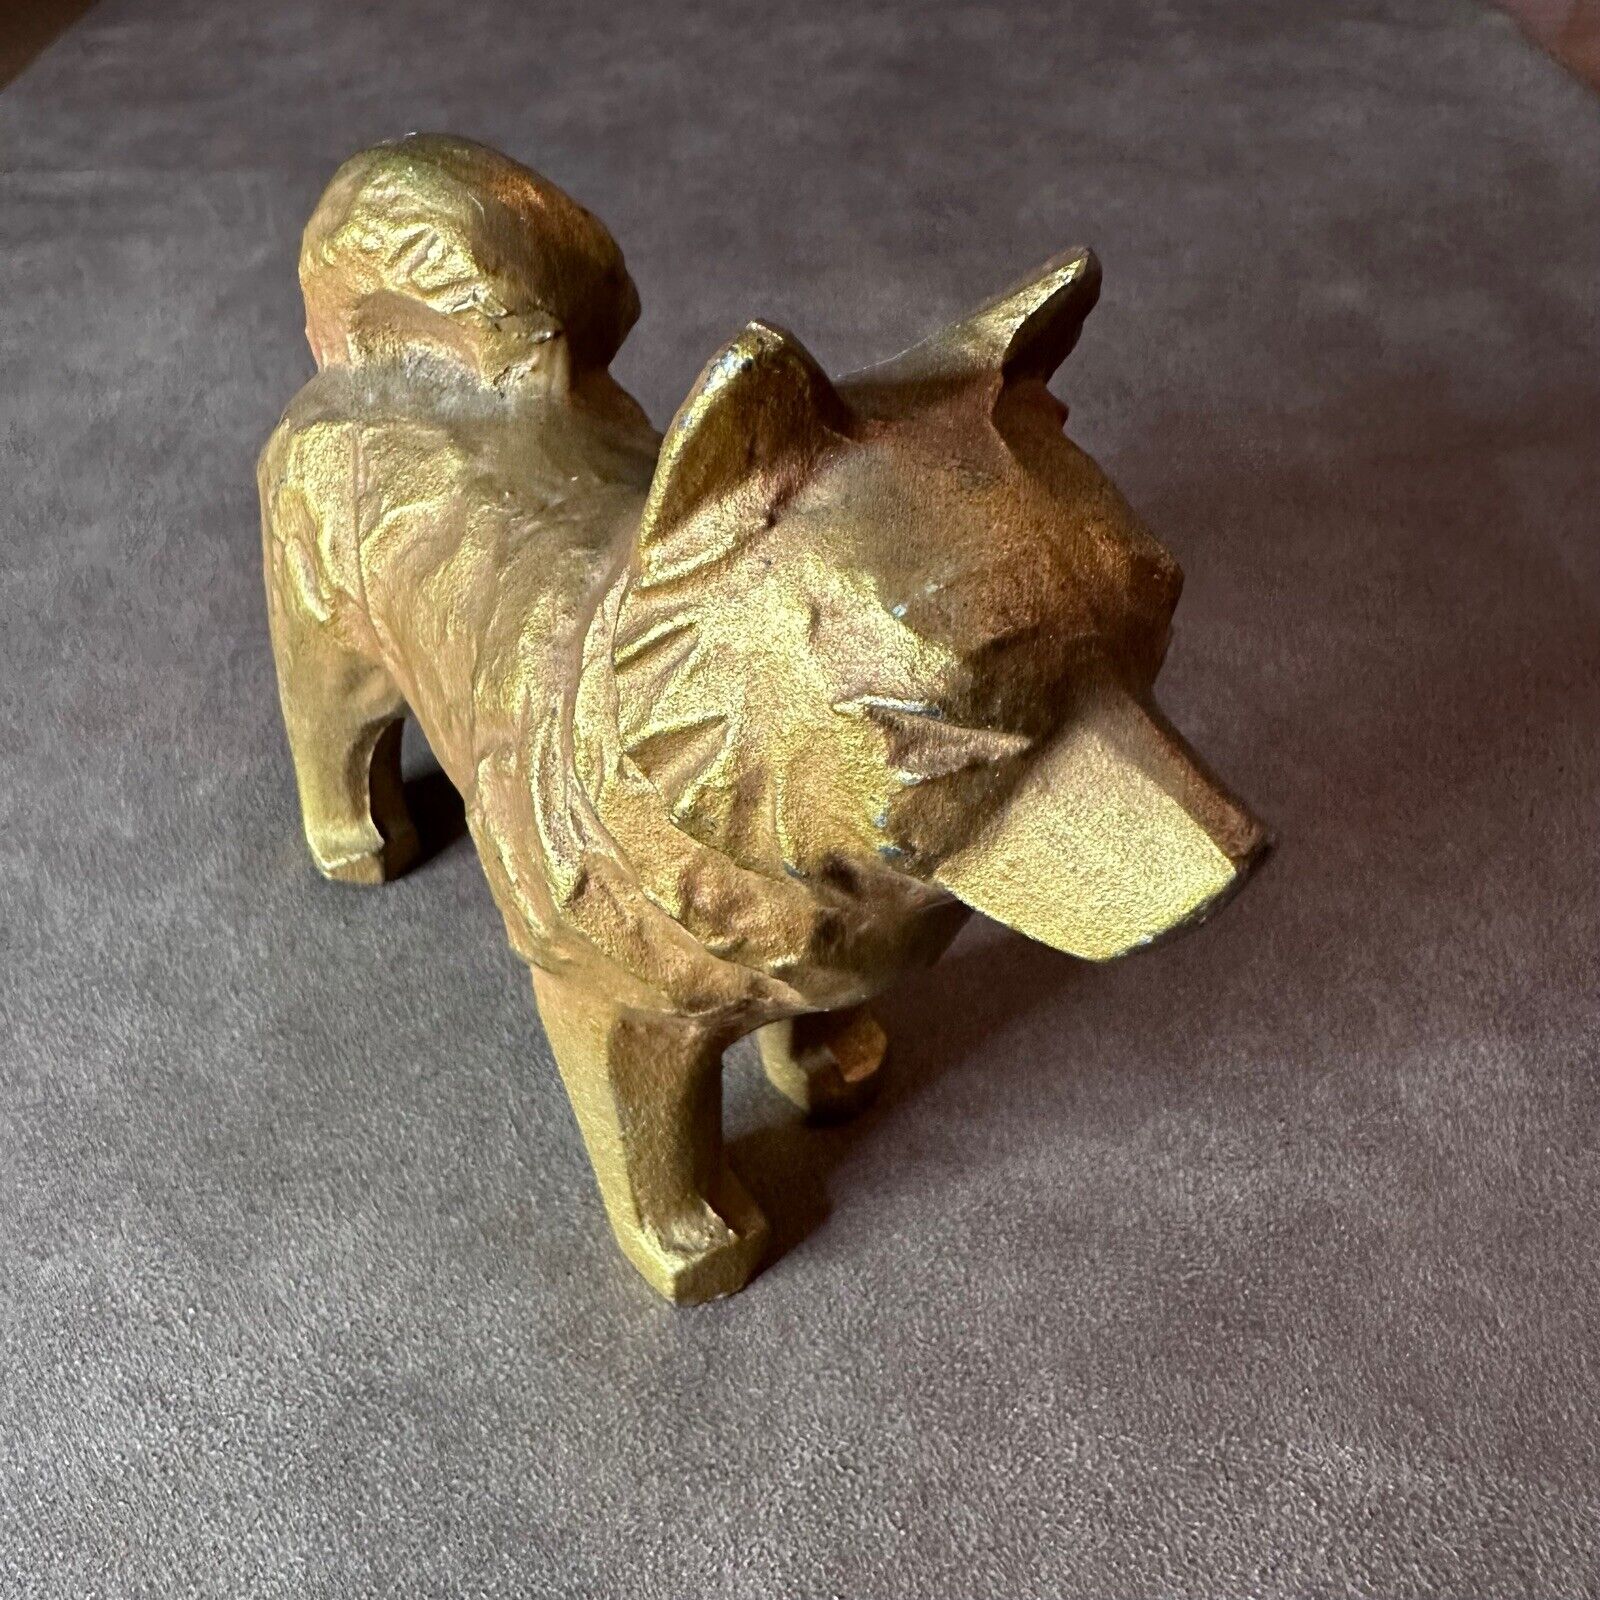 INTERESTING VINTAGE CAST METAL SIBERIAN HUSKY DOG ORNAMENT PAINTED GOLD